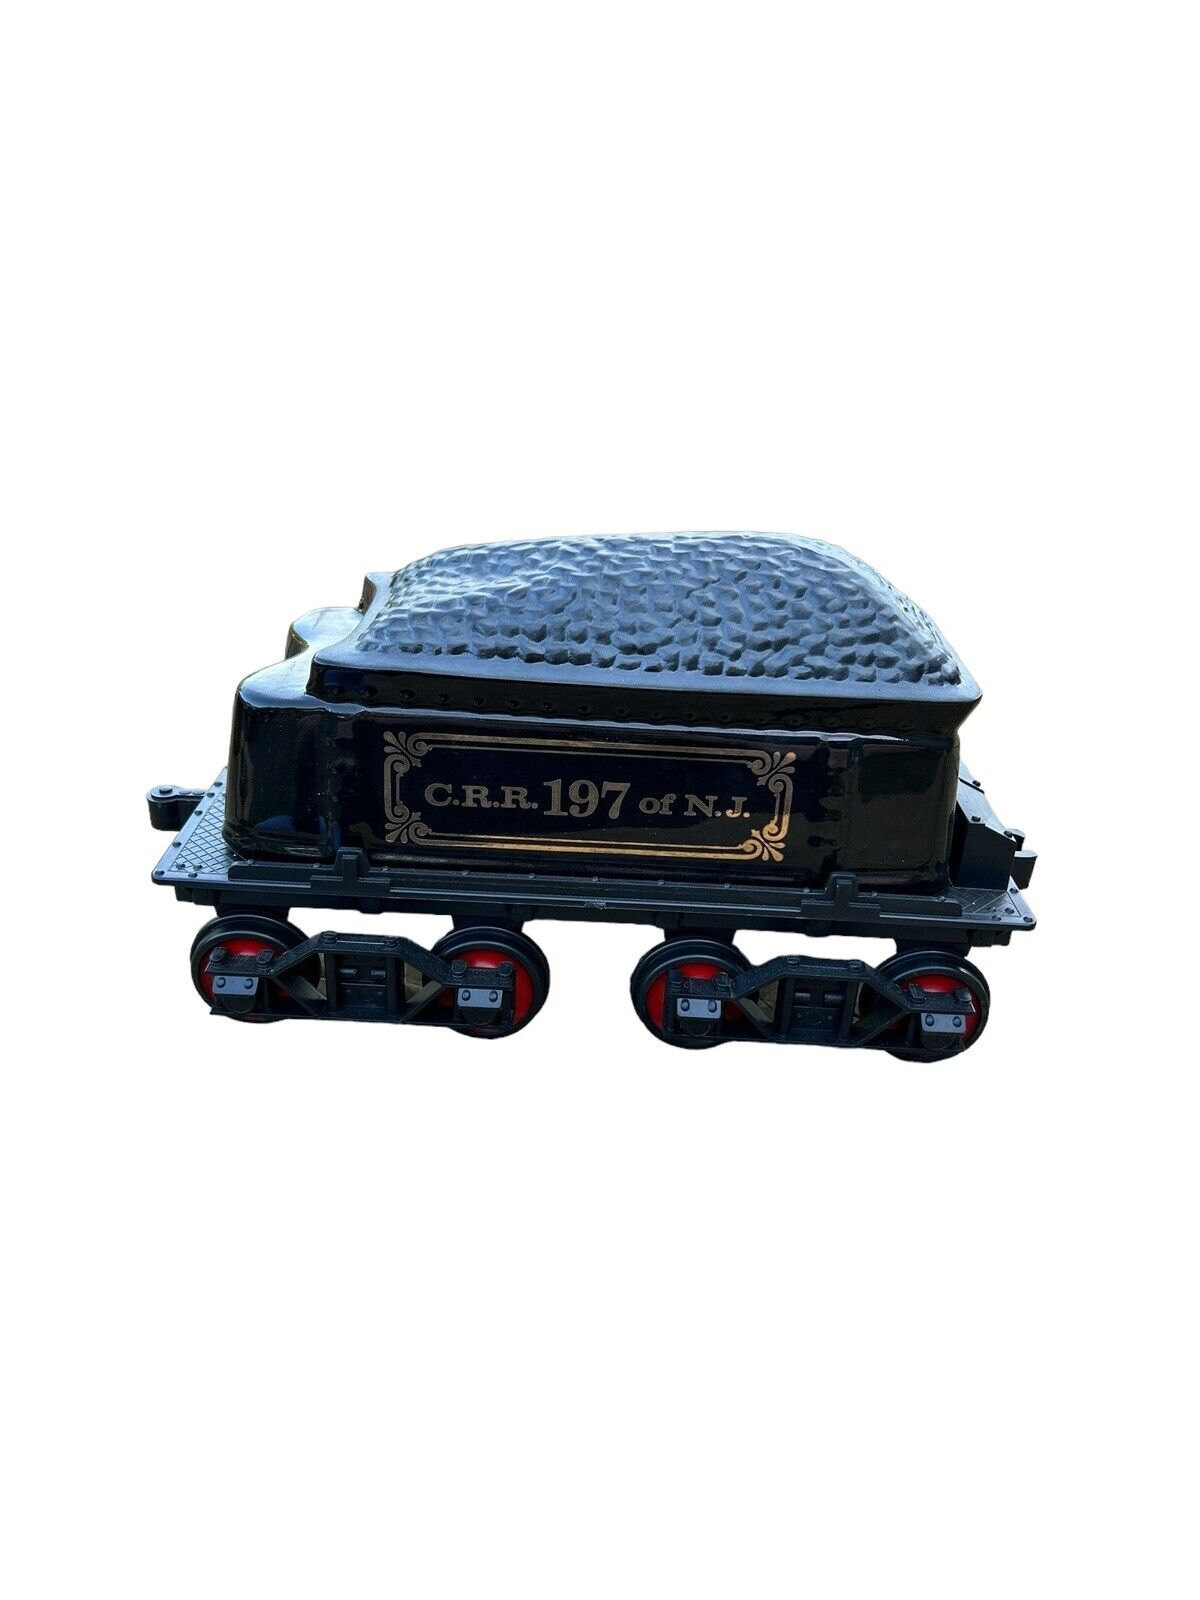 Vintage 1979 Jim Beam C.R.R. 197 of N. J. Coal Tender Car Train Railroad Black